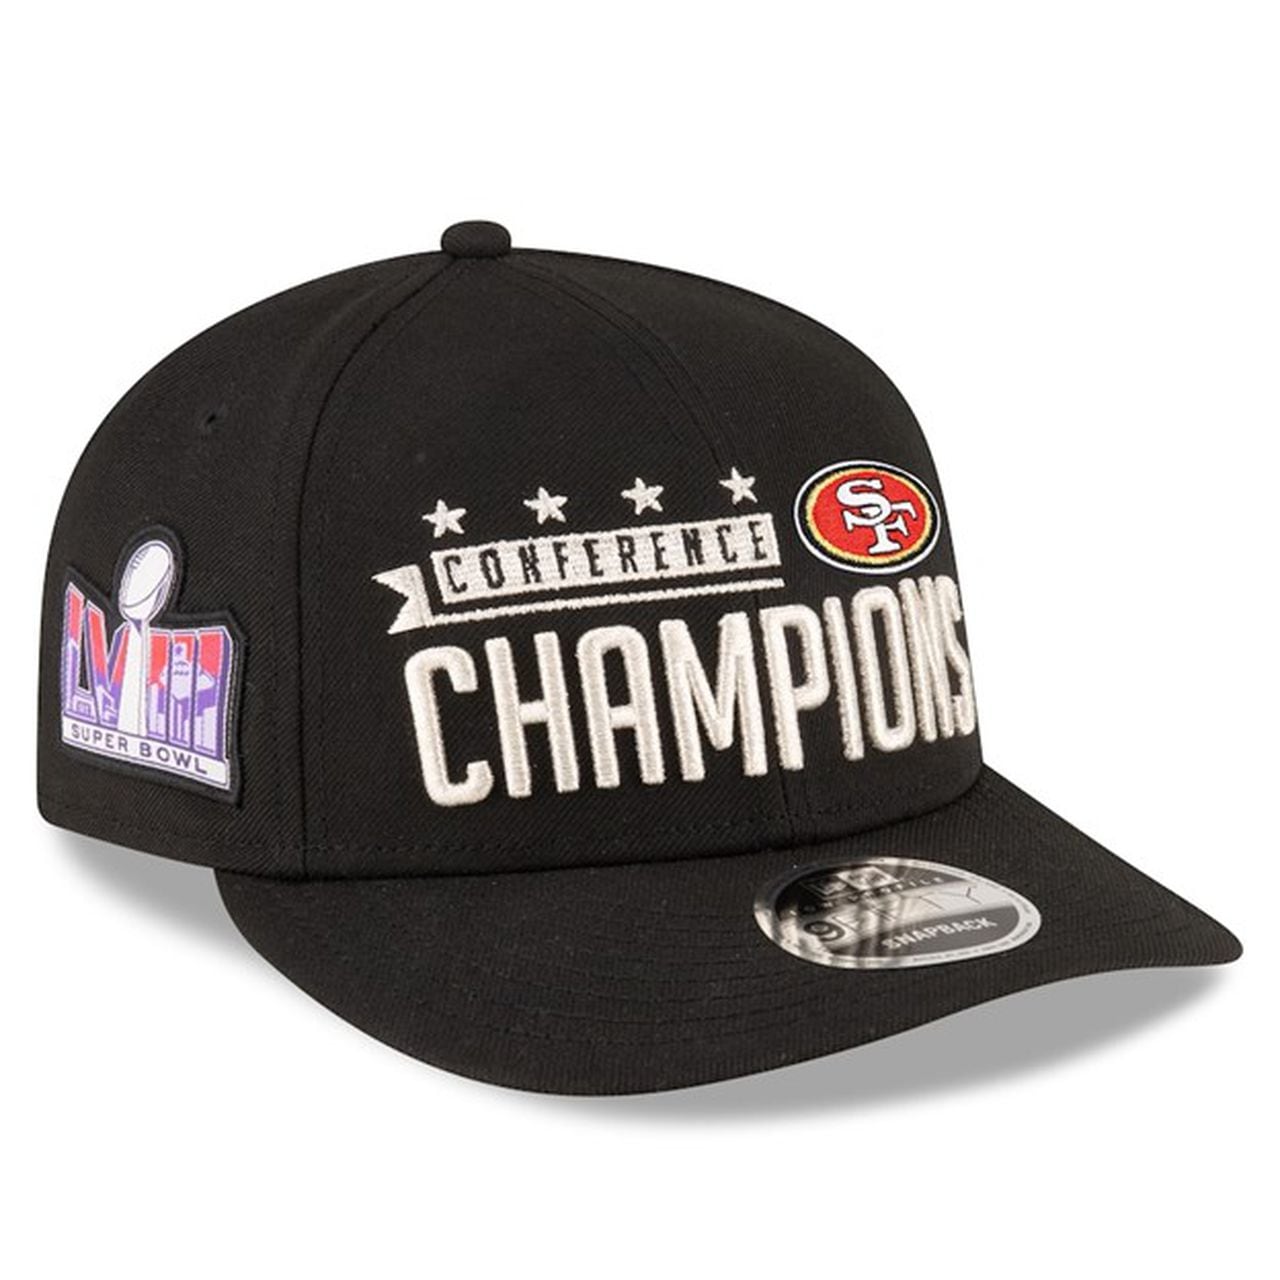 San Francisco 49ers New Era 2023 NFC Champions locker room snapback hat is $35.99 from Fanatics.